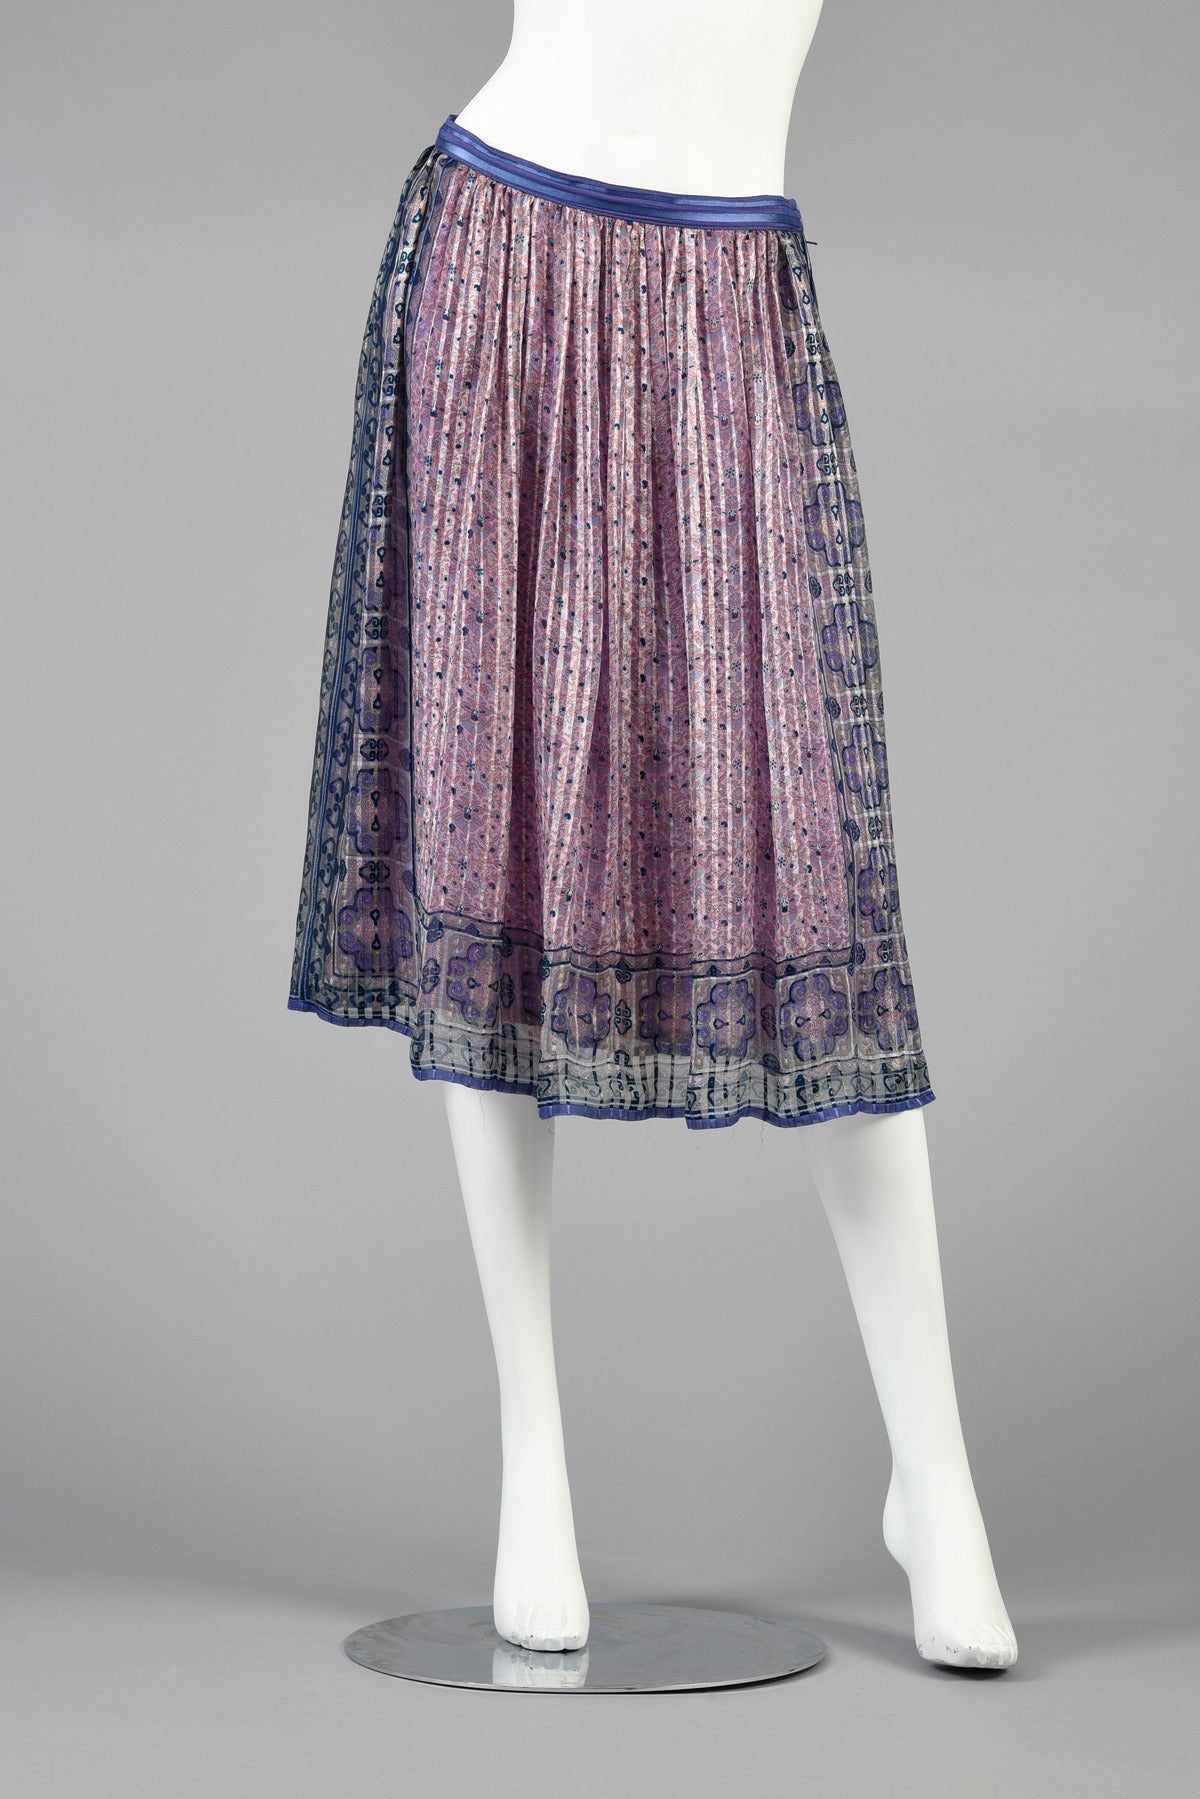 1970s Sheer Bohemian Silk Dress with an Indian Print 3